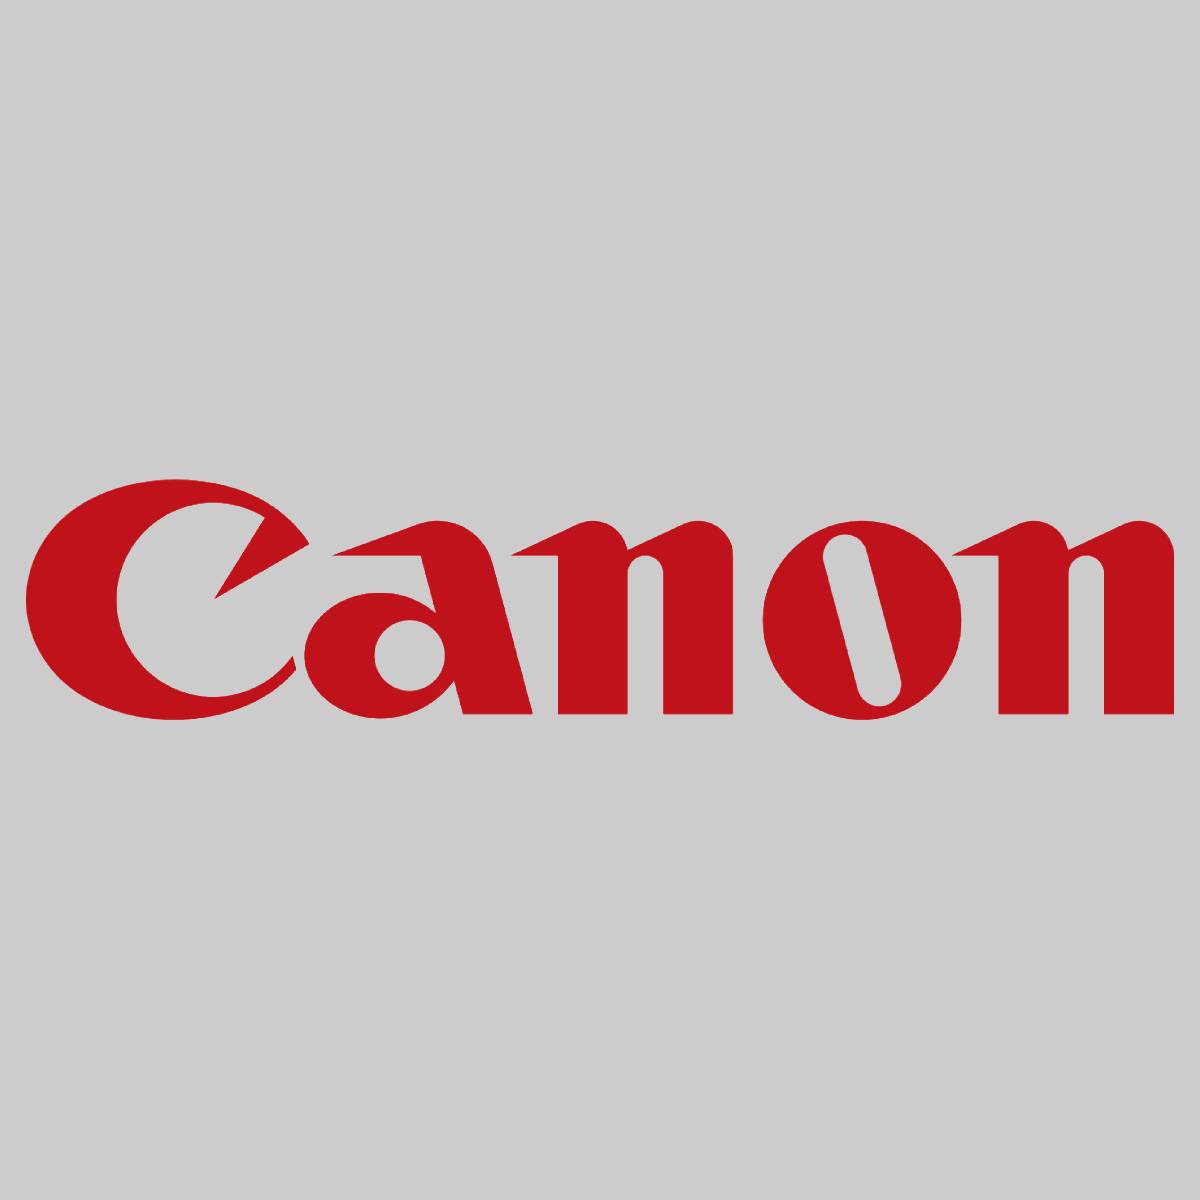 "Original Canon FIXING ASSEMBLY 110V FM1-D741-02U für imageRUNNER ADV C5250 5255